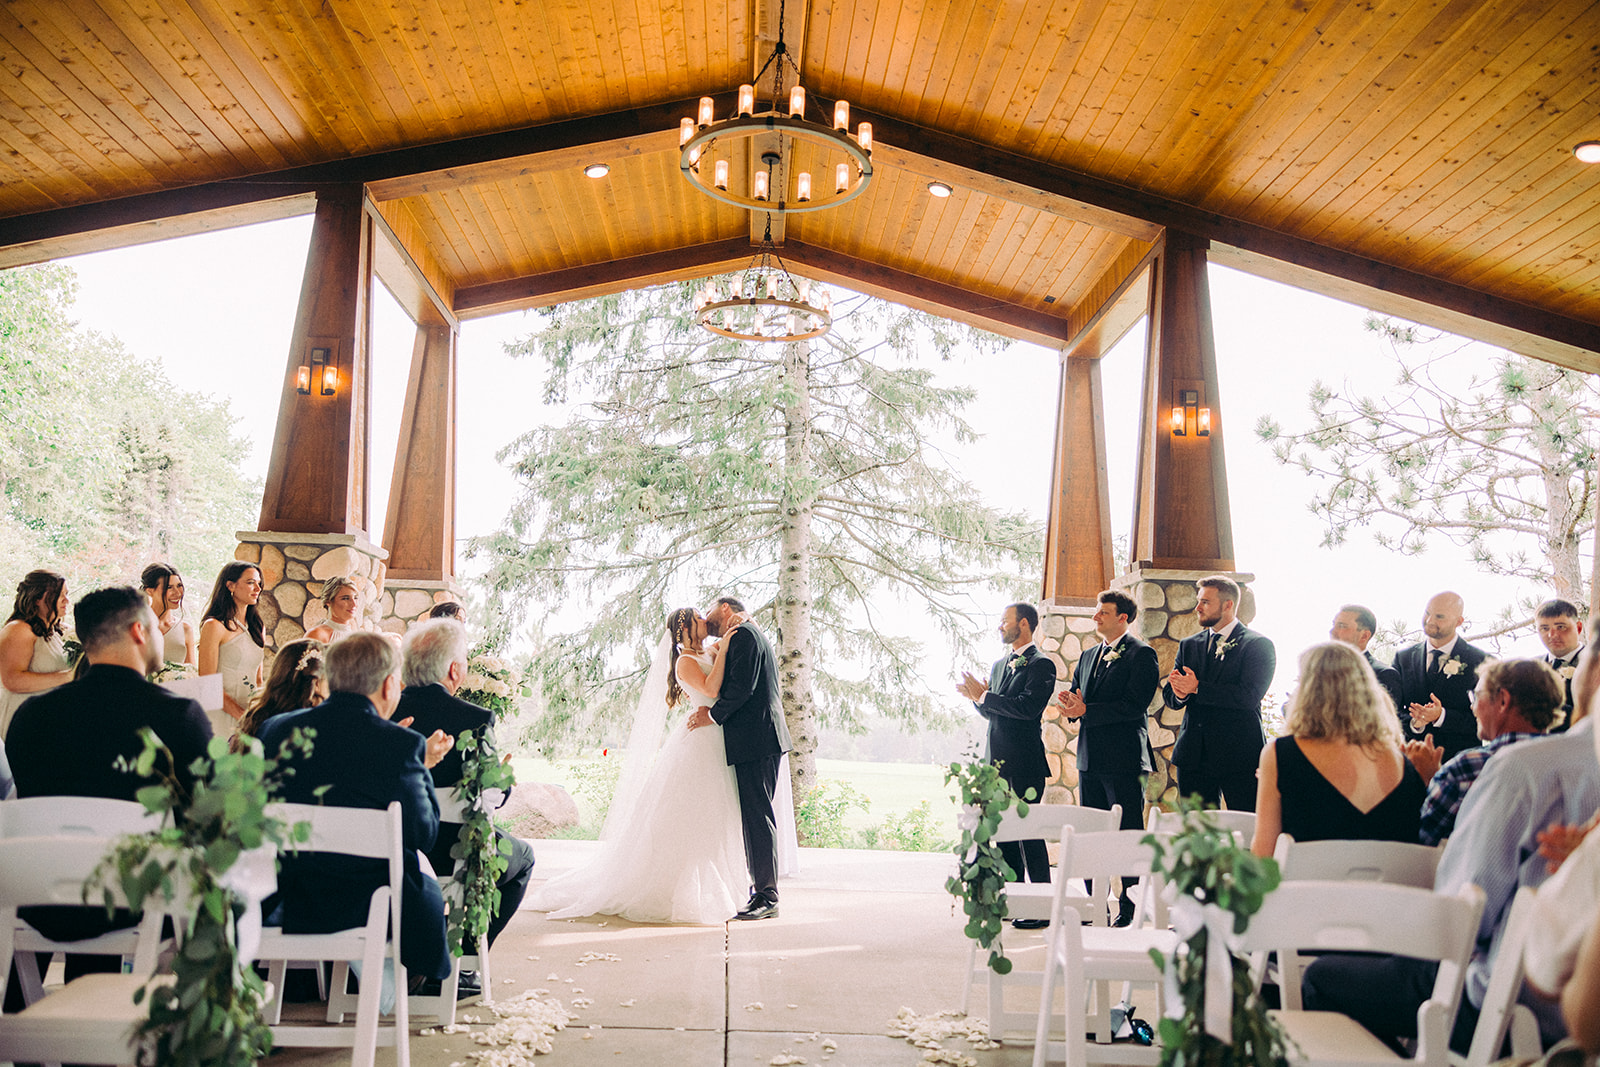 Antler's pavilion wedding ceremony picture